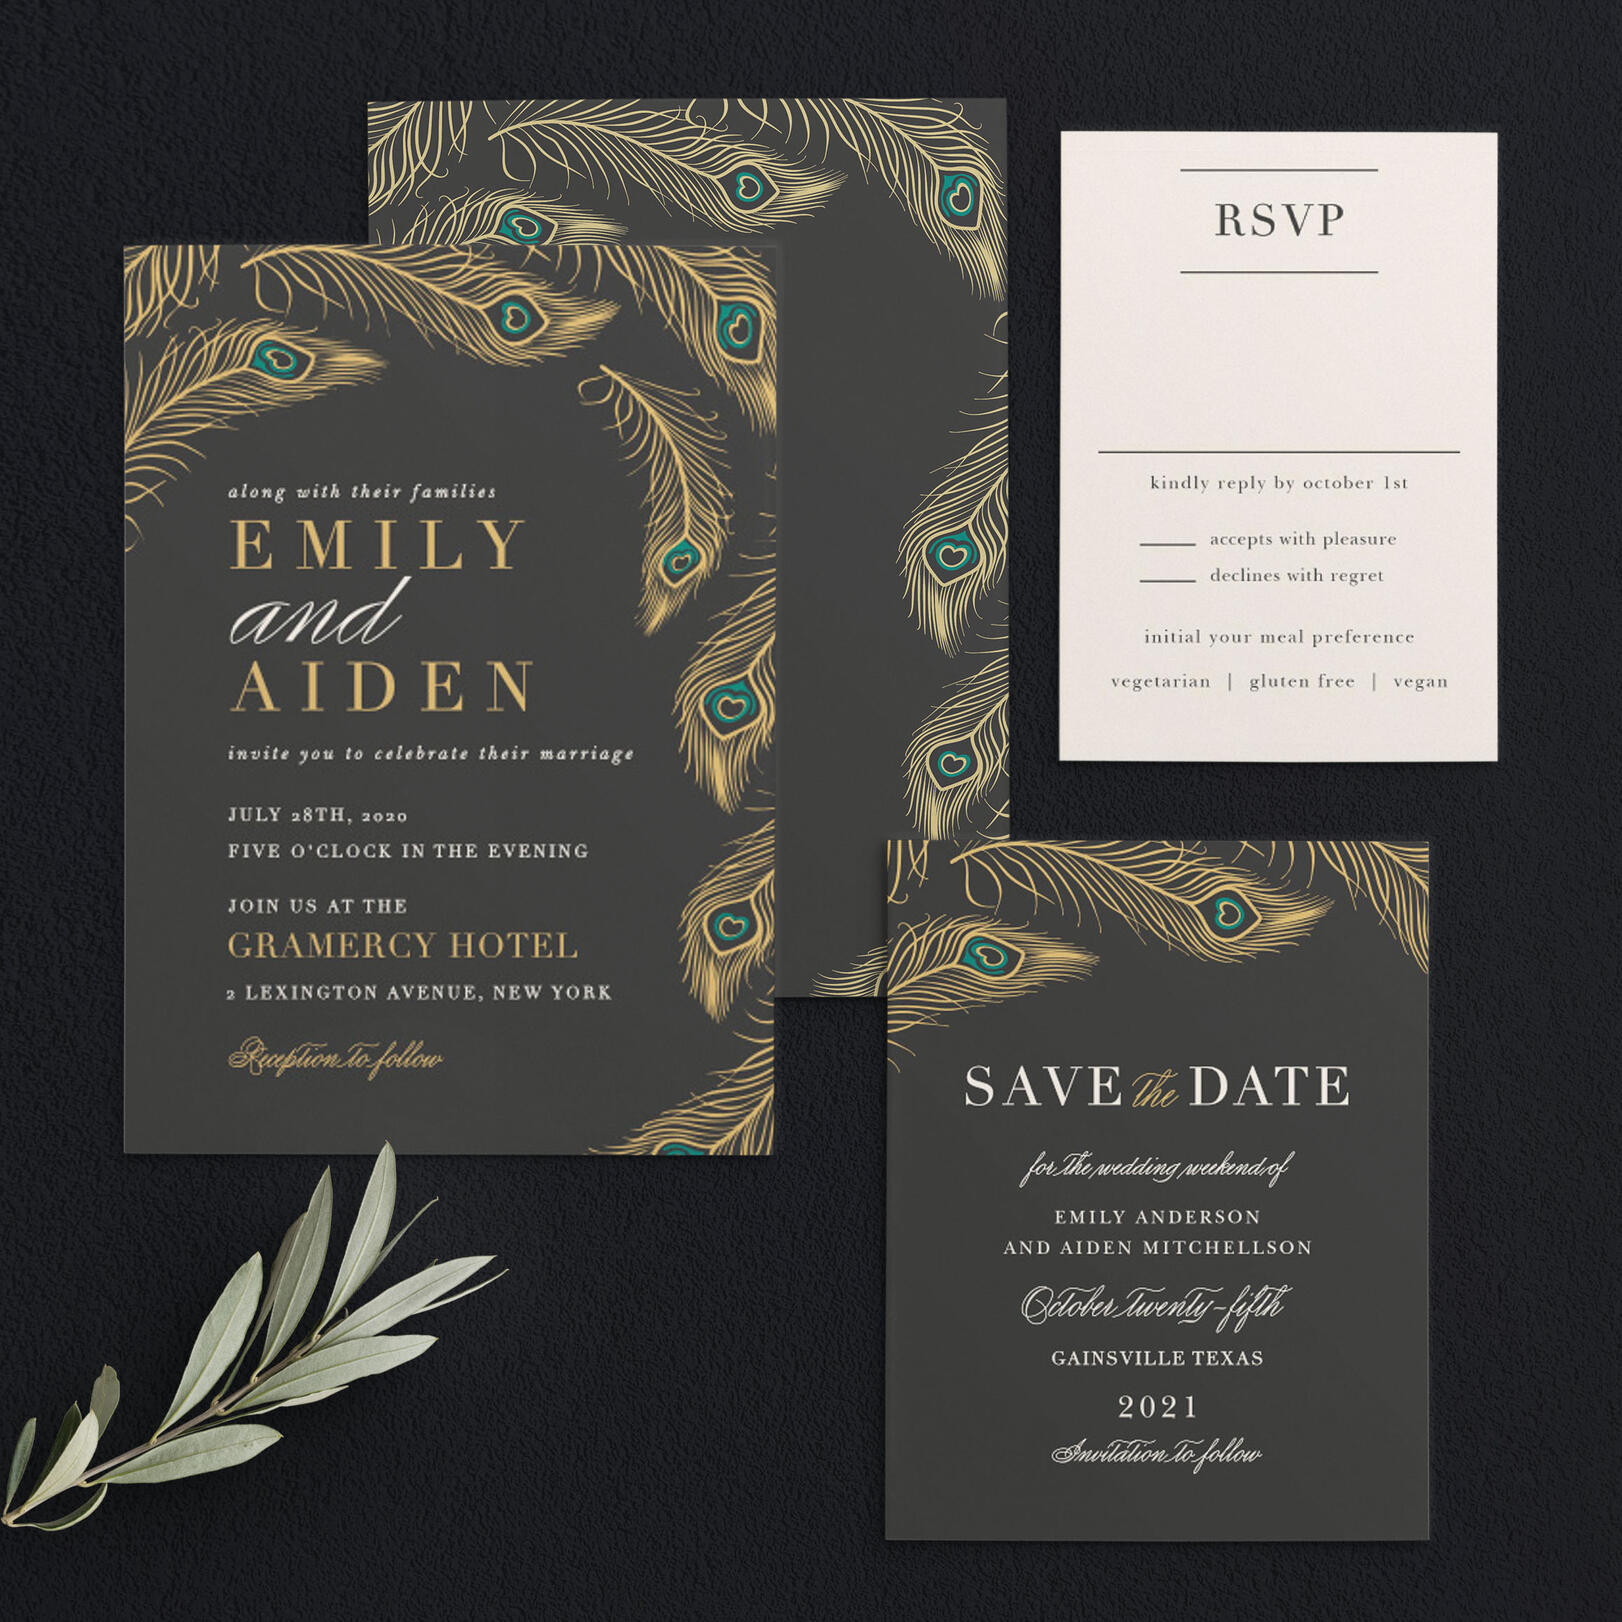 Peacocks Invitations in Gold Foil - 8 Blank Invitations & 8 Envelopes